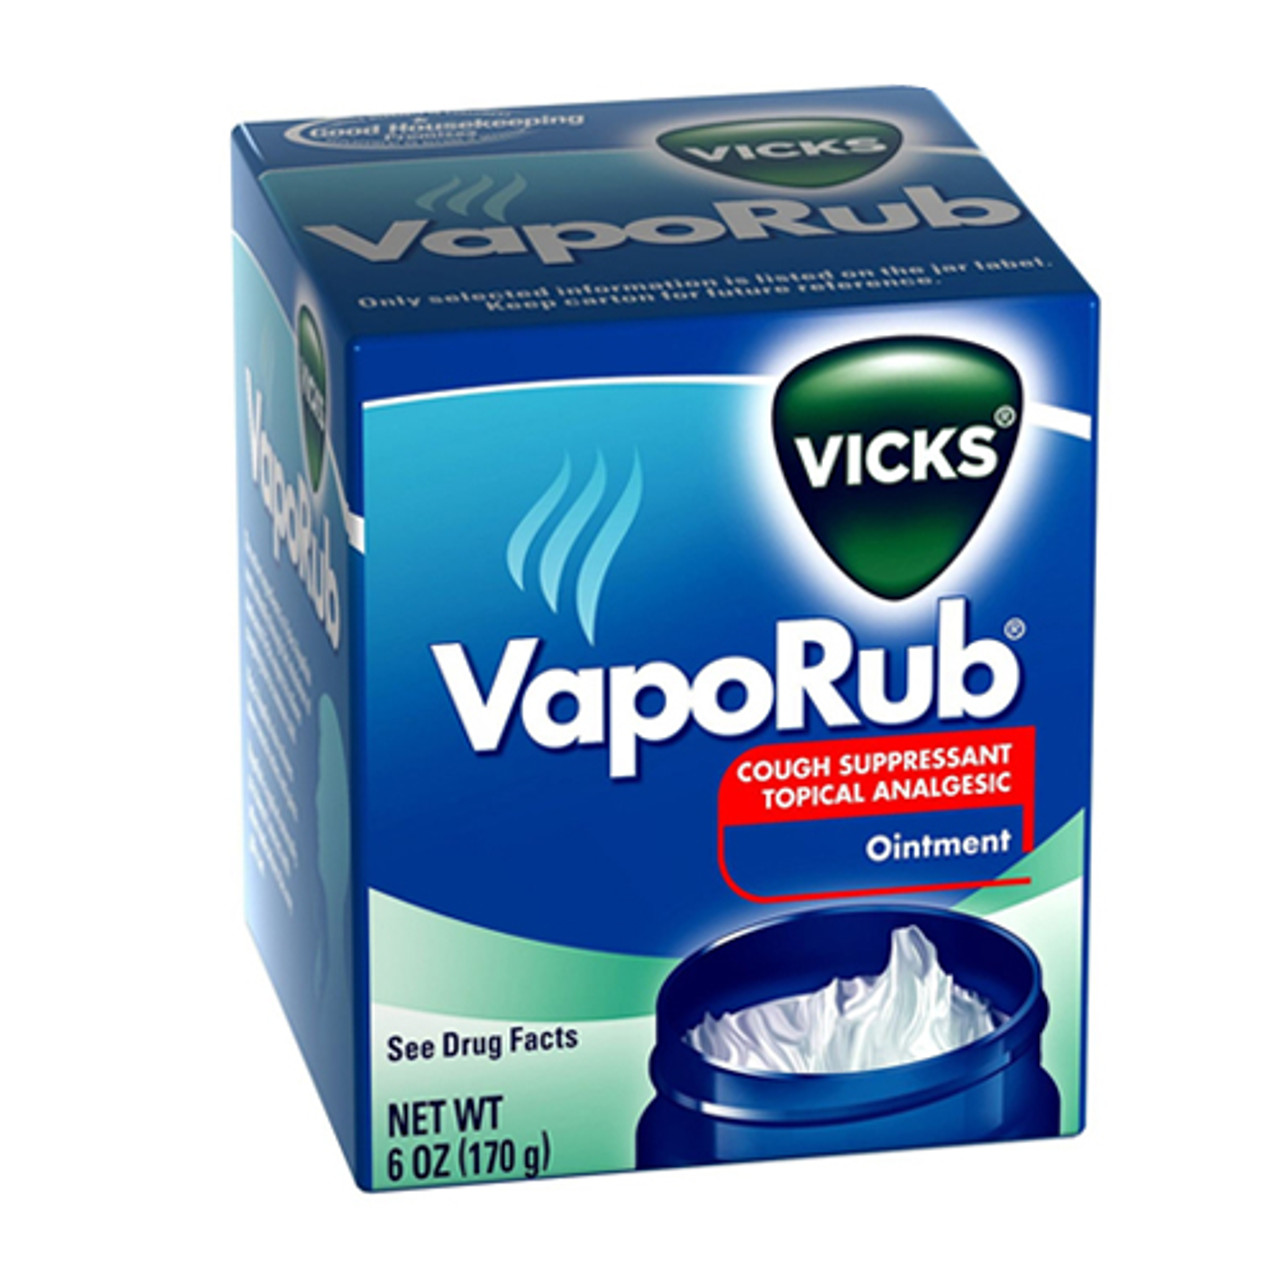 Vicks Vaporub Cough Suppressant Topical Analgesic Ointment - 6 Oz